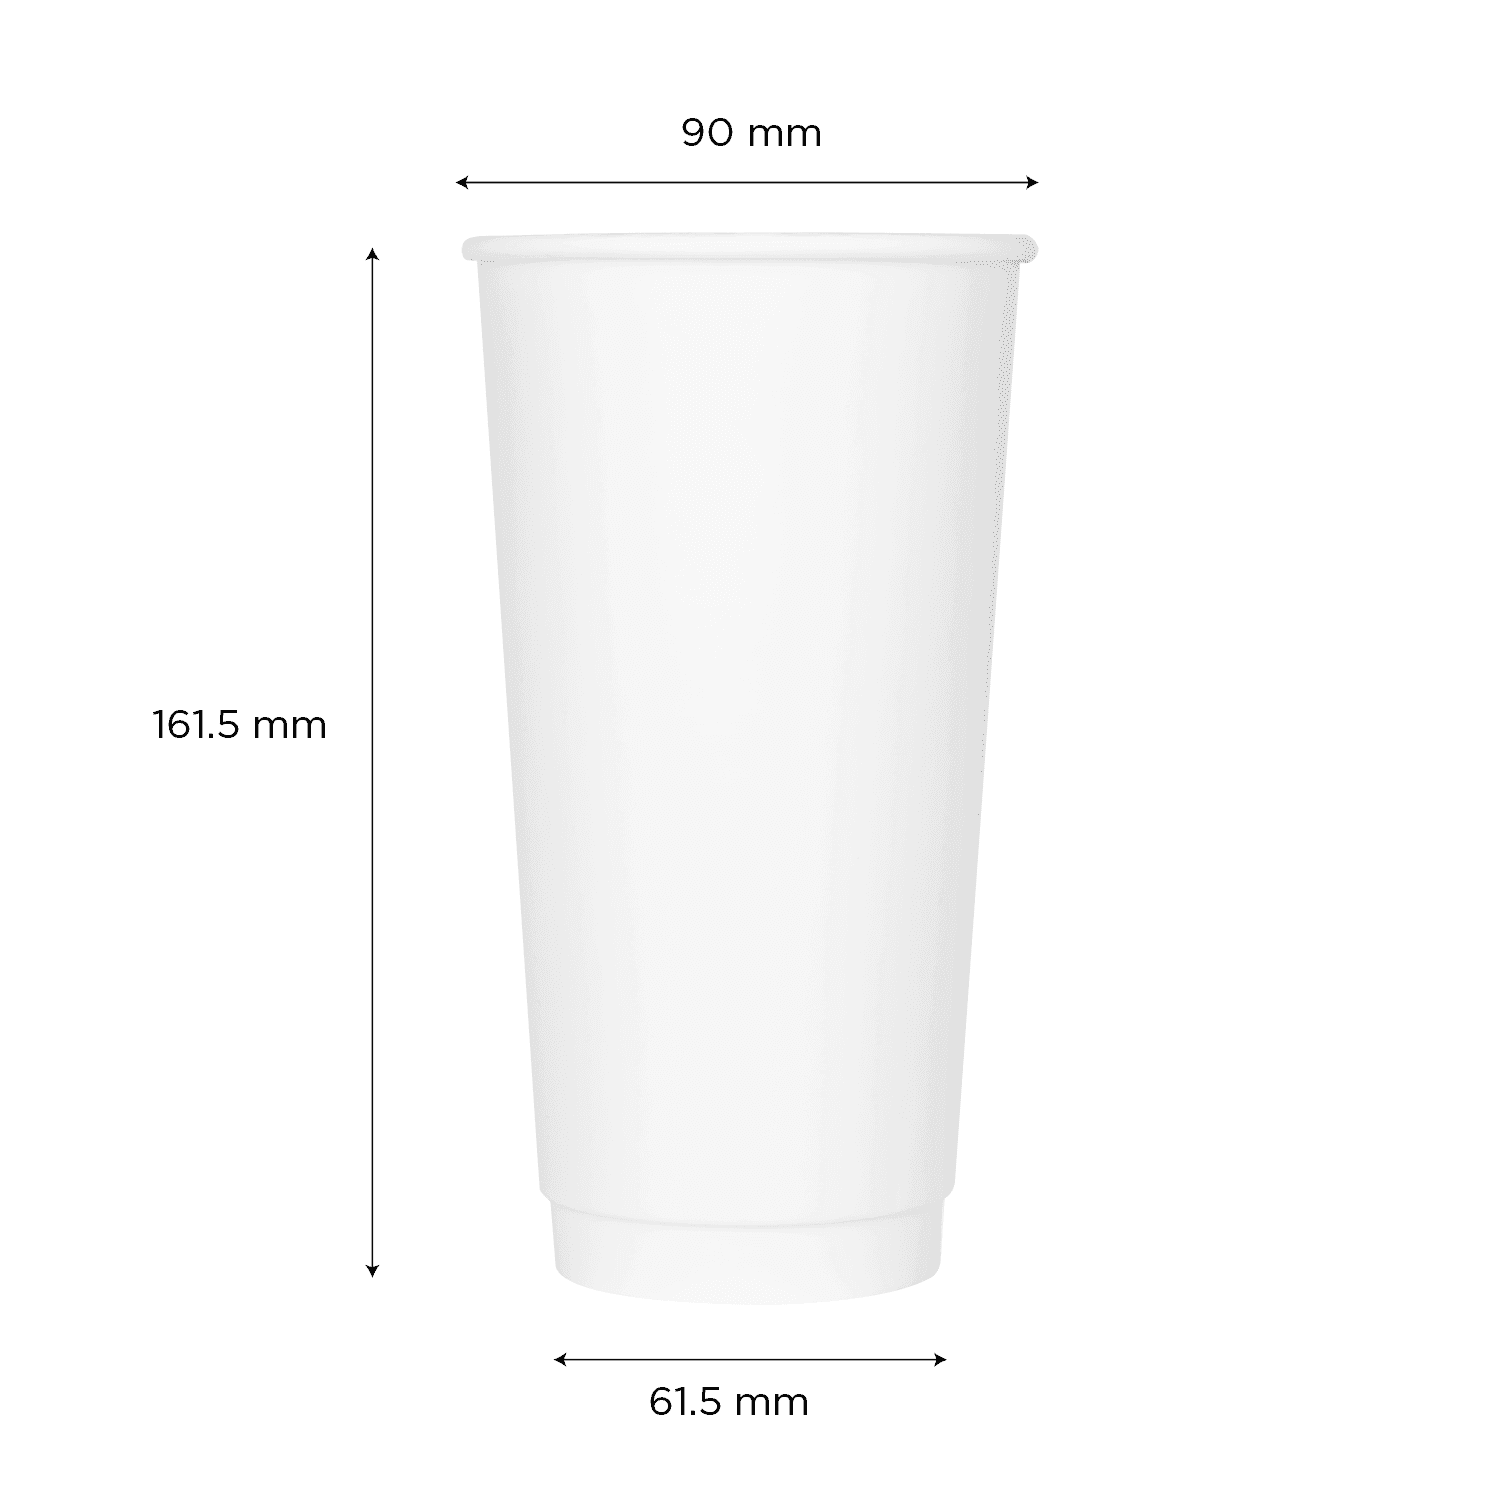 Karat 20oz Insulated Paper Hot Cups (90mm), White - 300 pcs